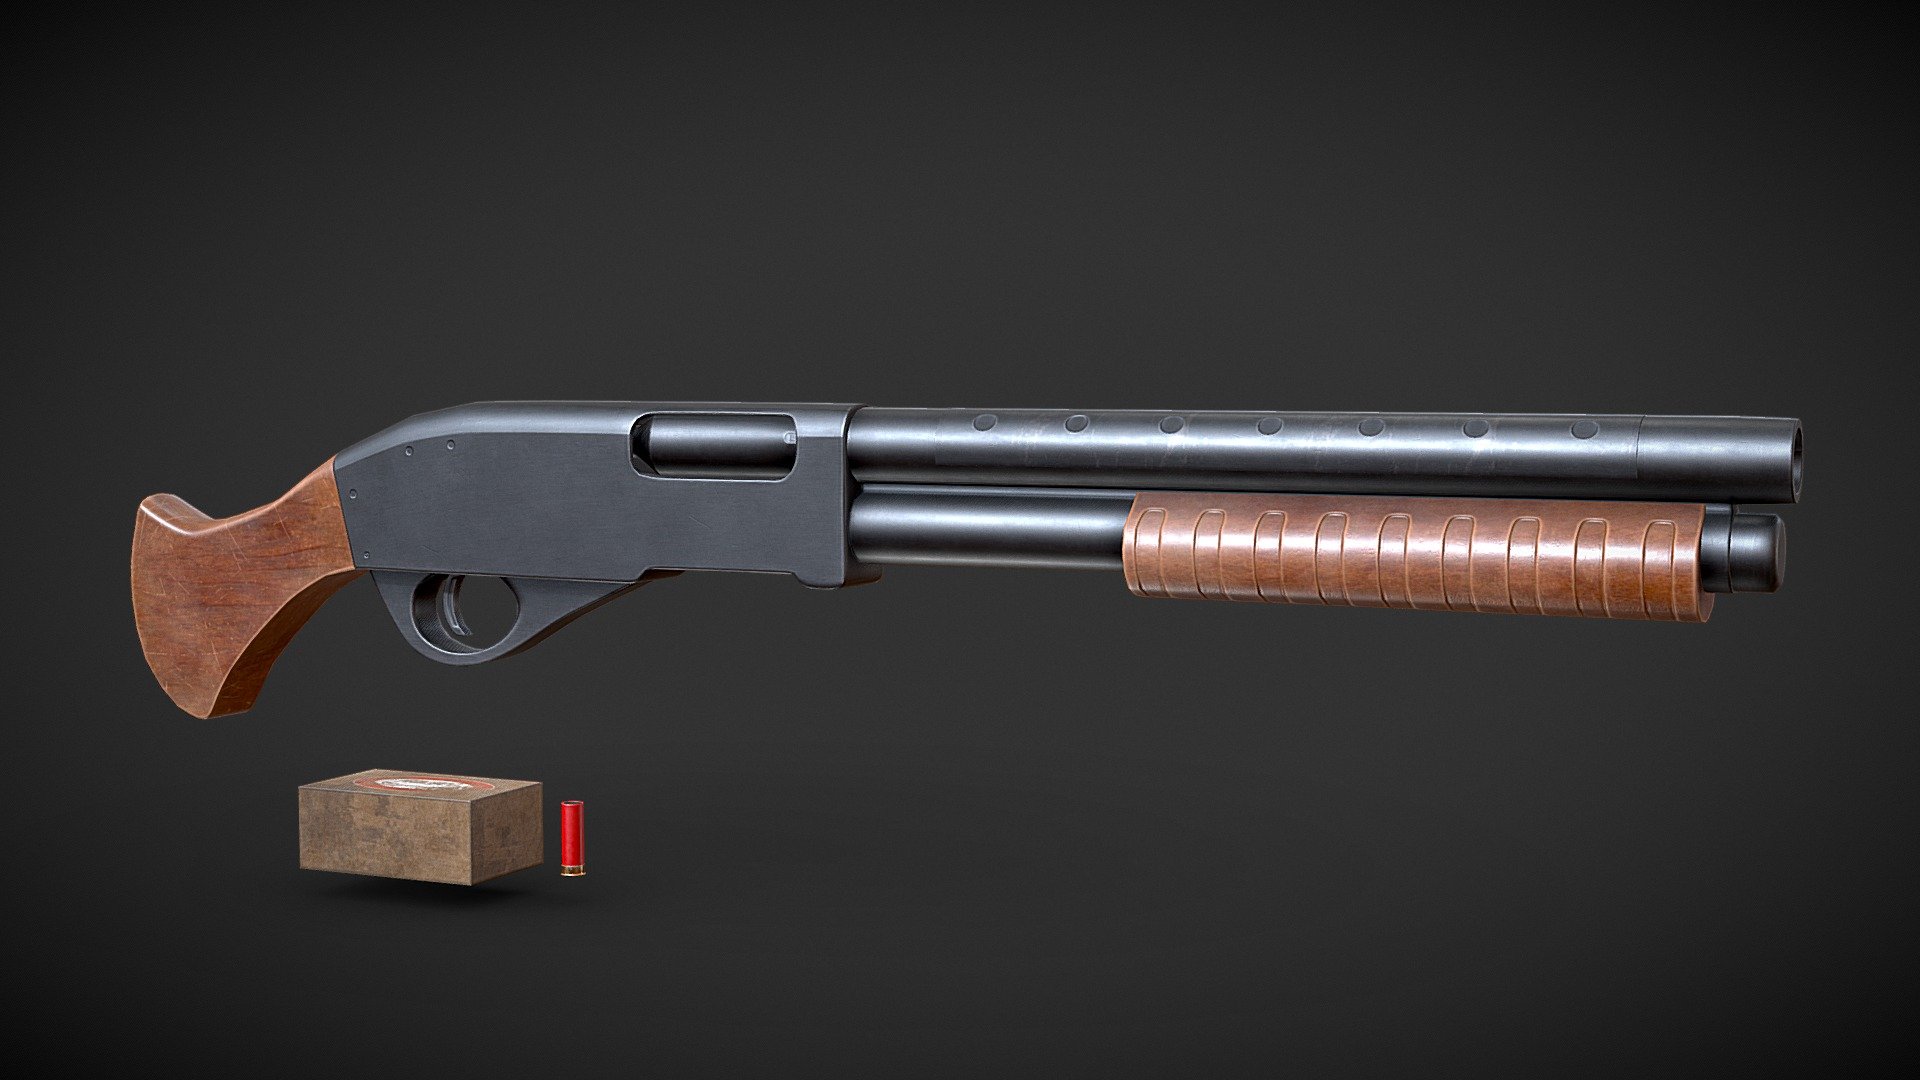 MODEL

-Shotgun, ammo, ammo box

MADE

-Made in blender, 

Texture in Substance painter PBR:

Shotgun-2048k 

Ammo-1024k

TRIS

-Low Poly Shotgun 3.6k, ammo 300 tris - Shotgun Low Poly - Download Free 3D model by majkeloon 3d model